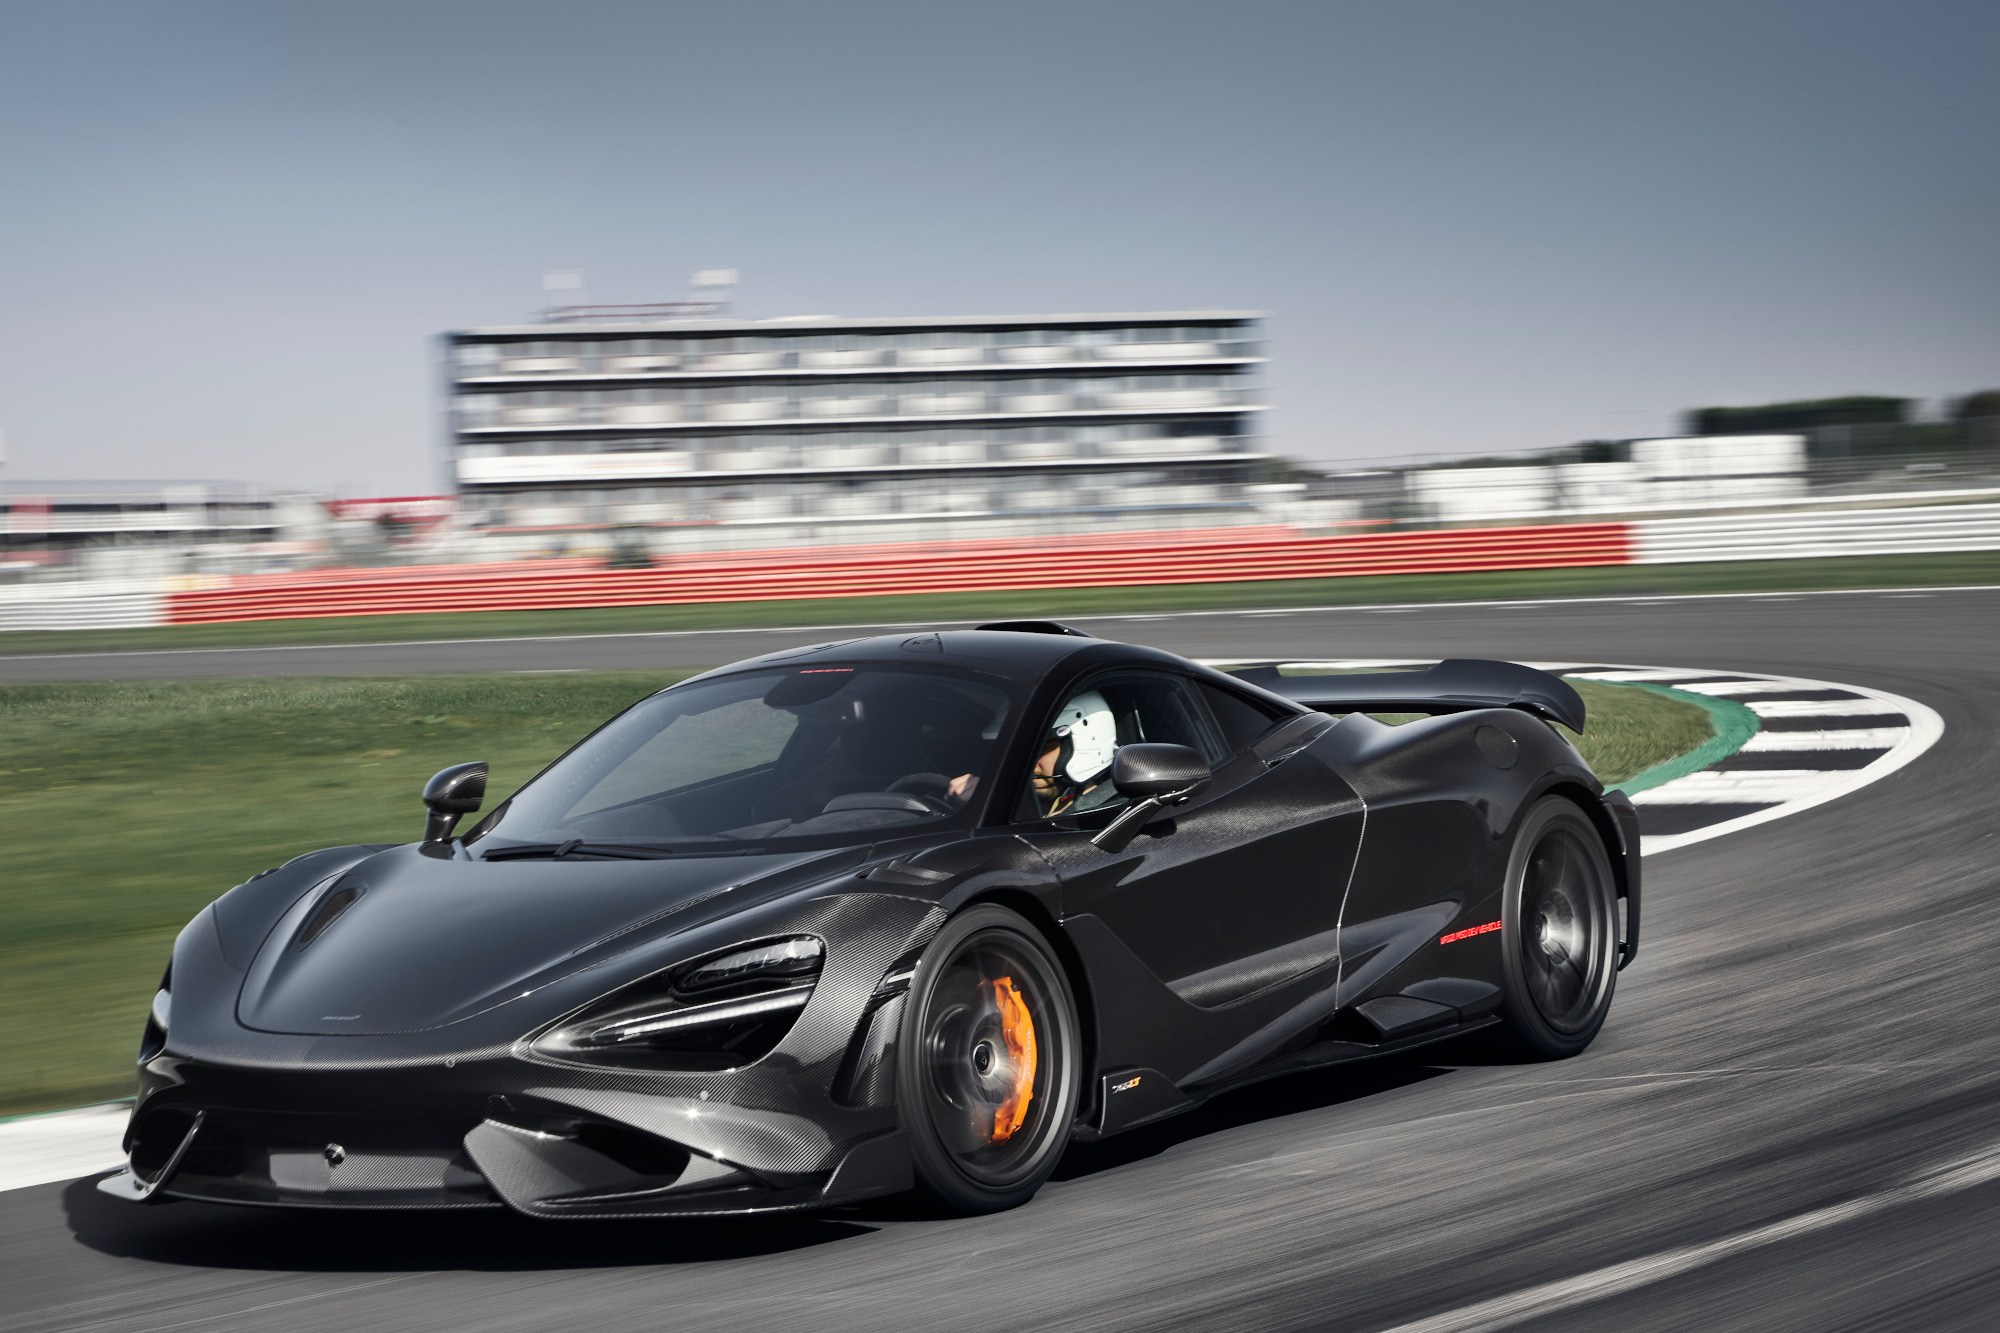 McLaren chooses Pirelli tyres for its fastest ever production car – the McLaren 765LT